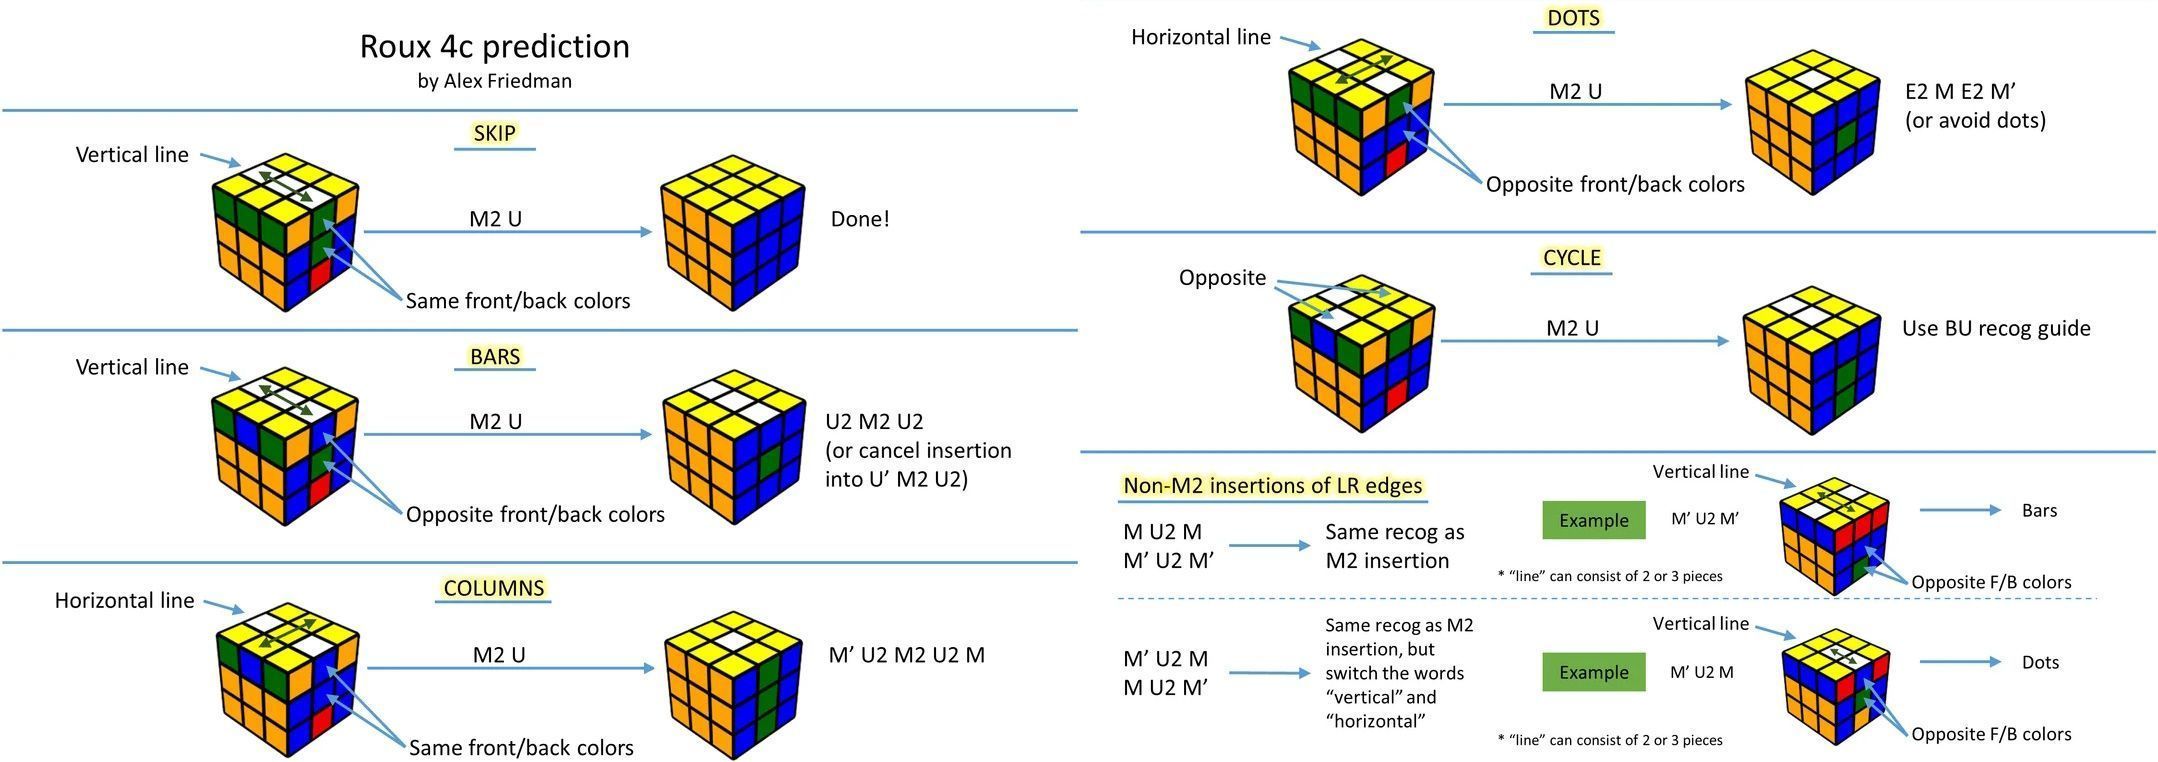 Сборка кубика Рубика 3 на 3 Метод Фридрих | Научитесь собирать Кубик Рубика онлайн | CCCSTORE